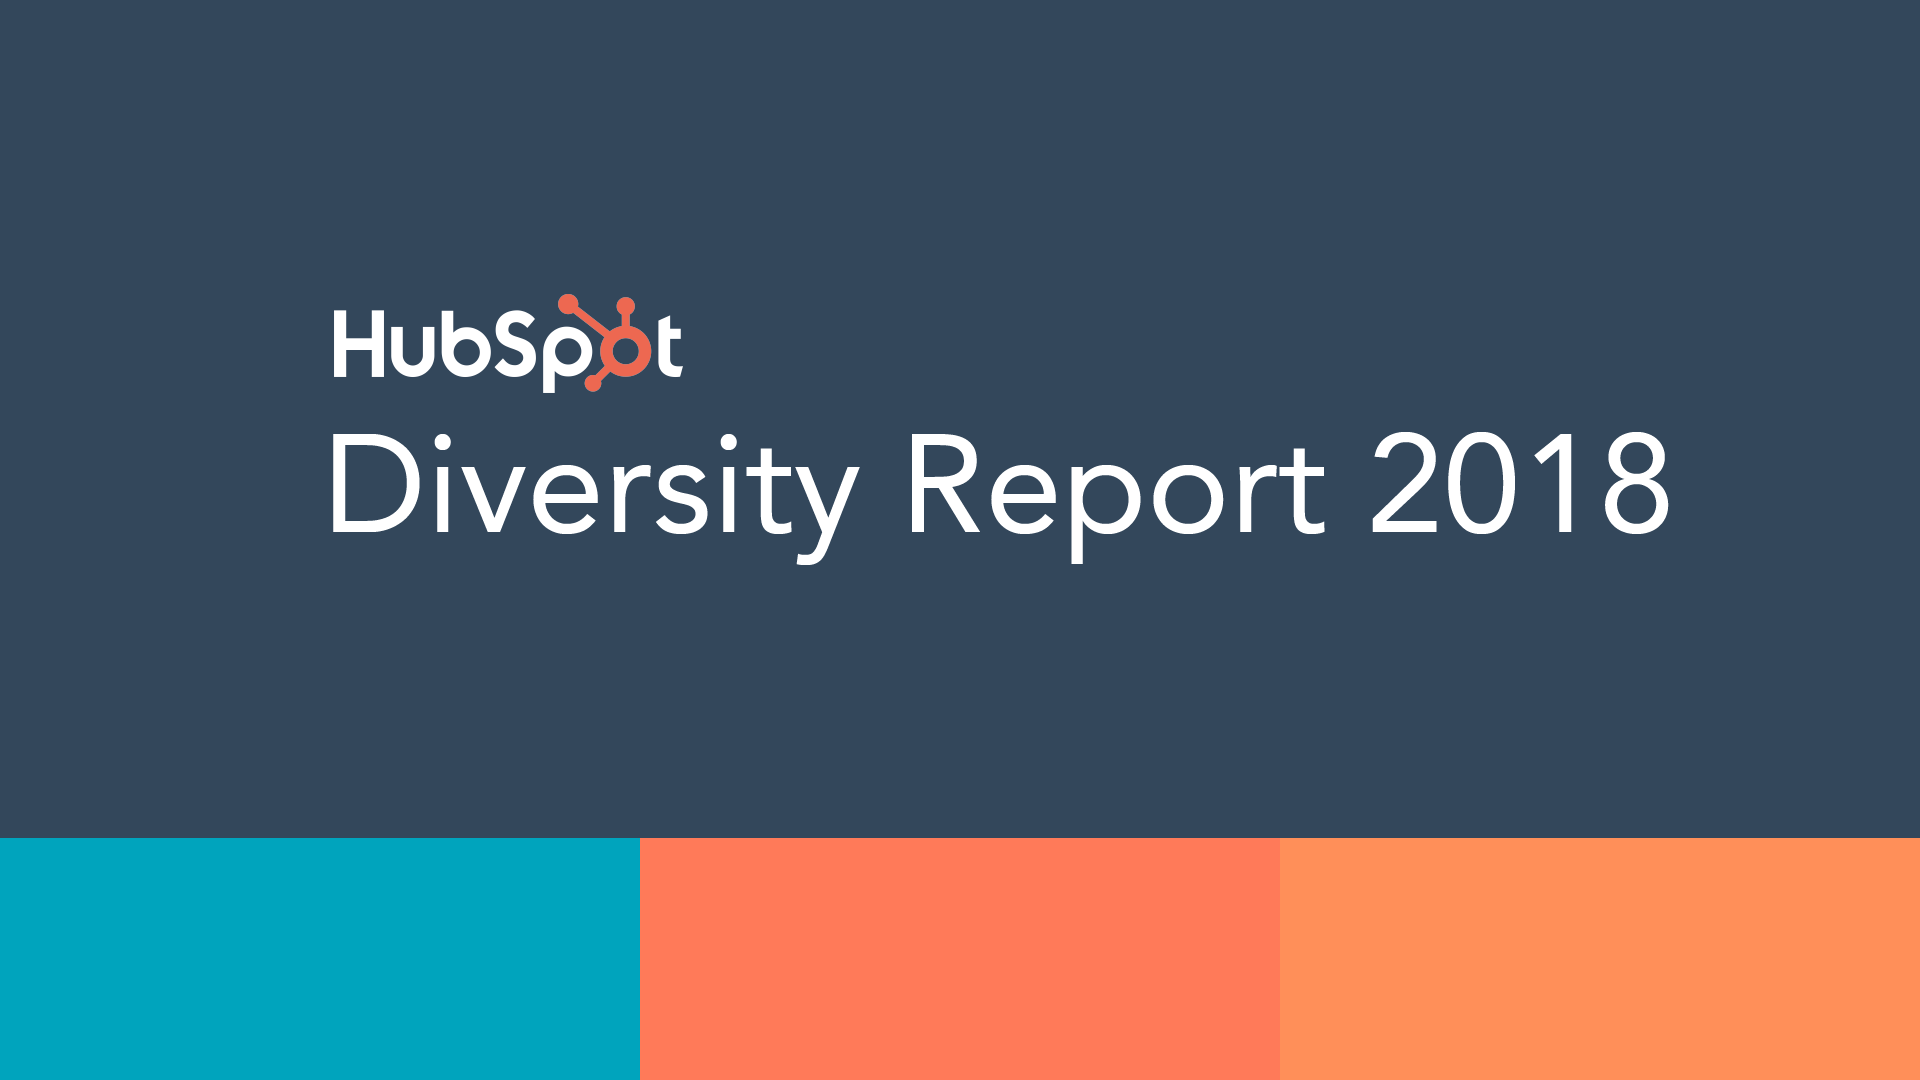 HubSpot Releases 2018 Diversity Report, Reflects on Progress